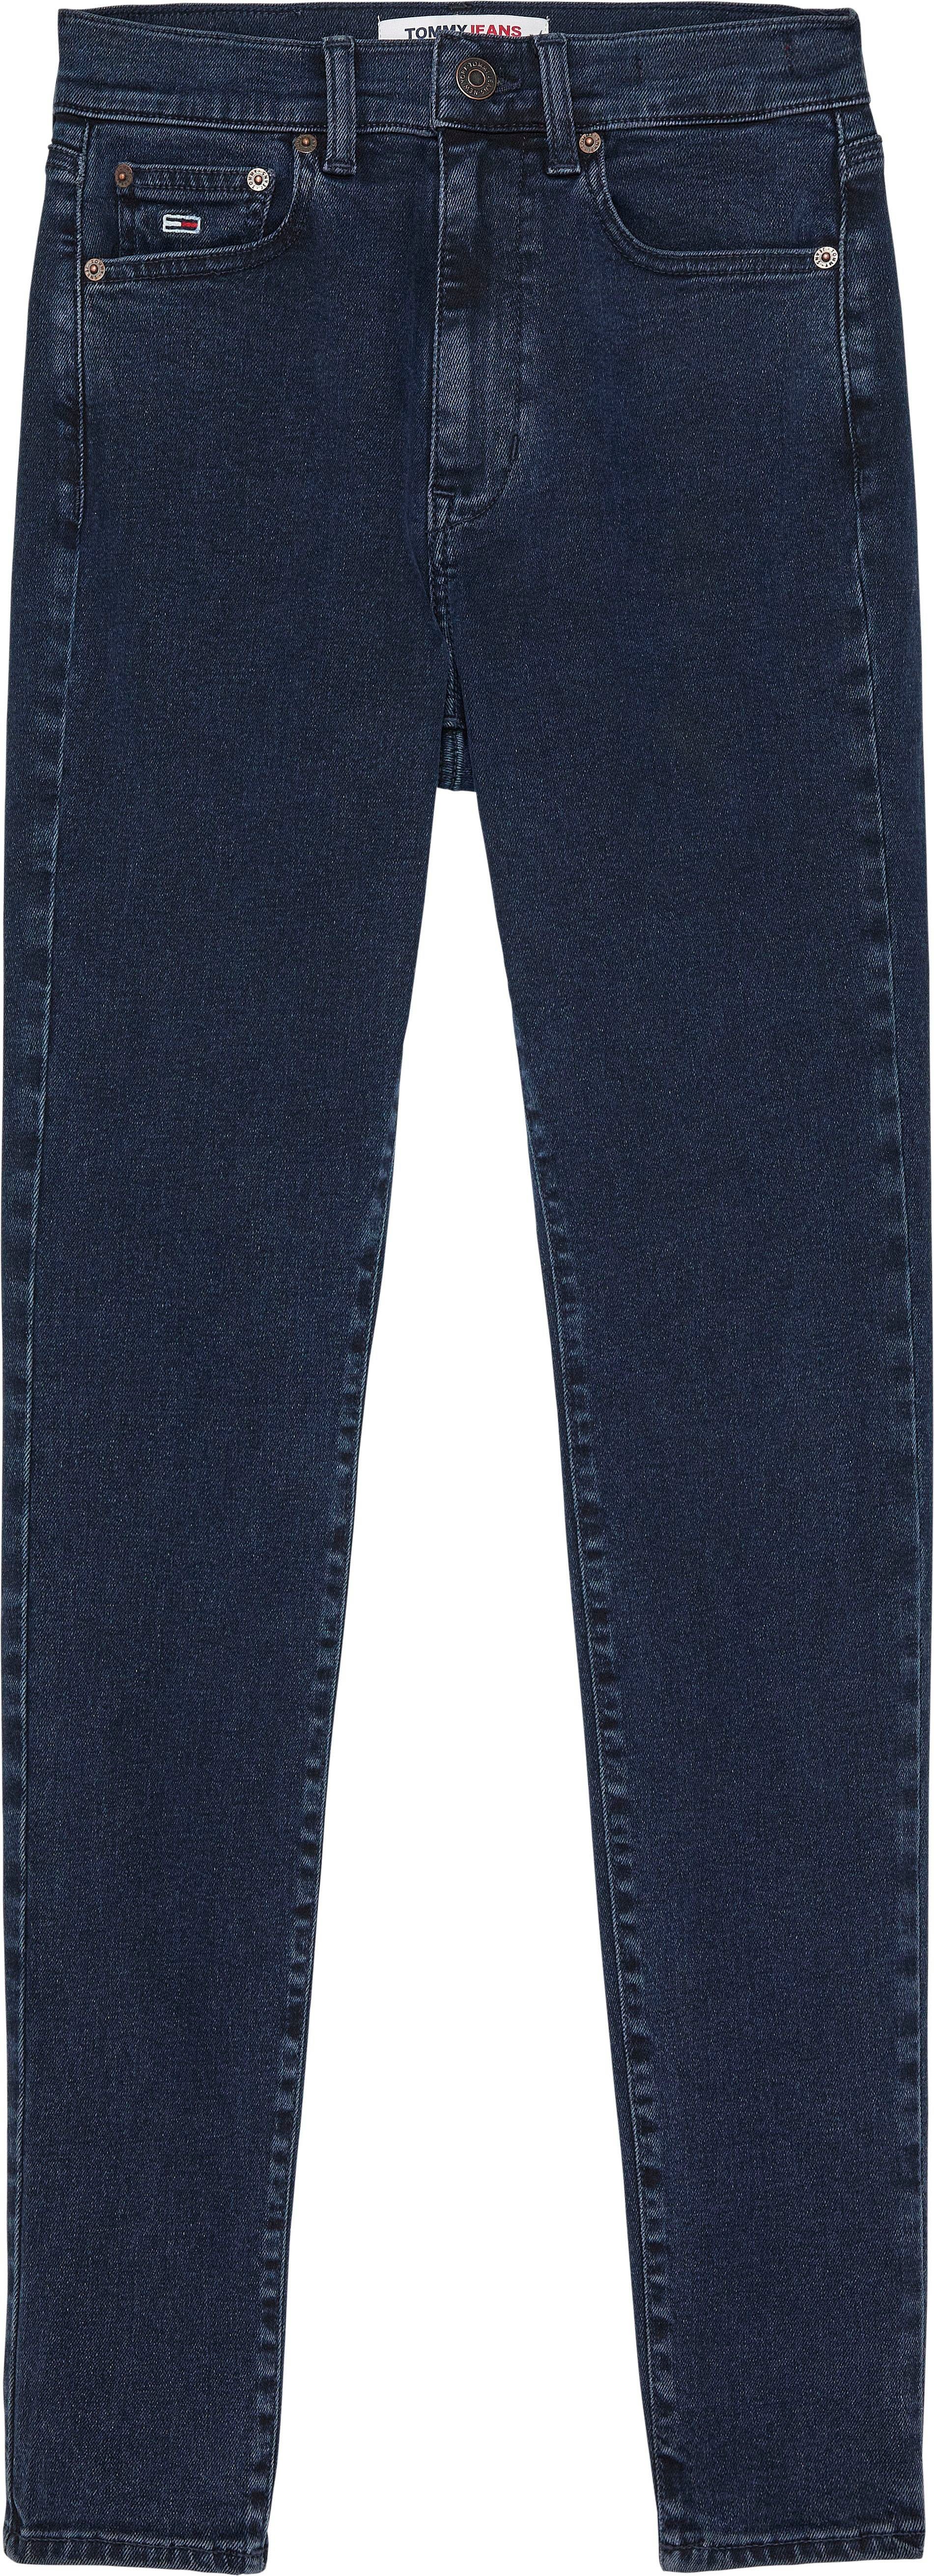 mit Skinny-fit-Jeans und Logobadge CG4 Jeans Jeans SSKN Labelflags SYLVIA HR dark_denim2 Tommy